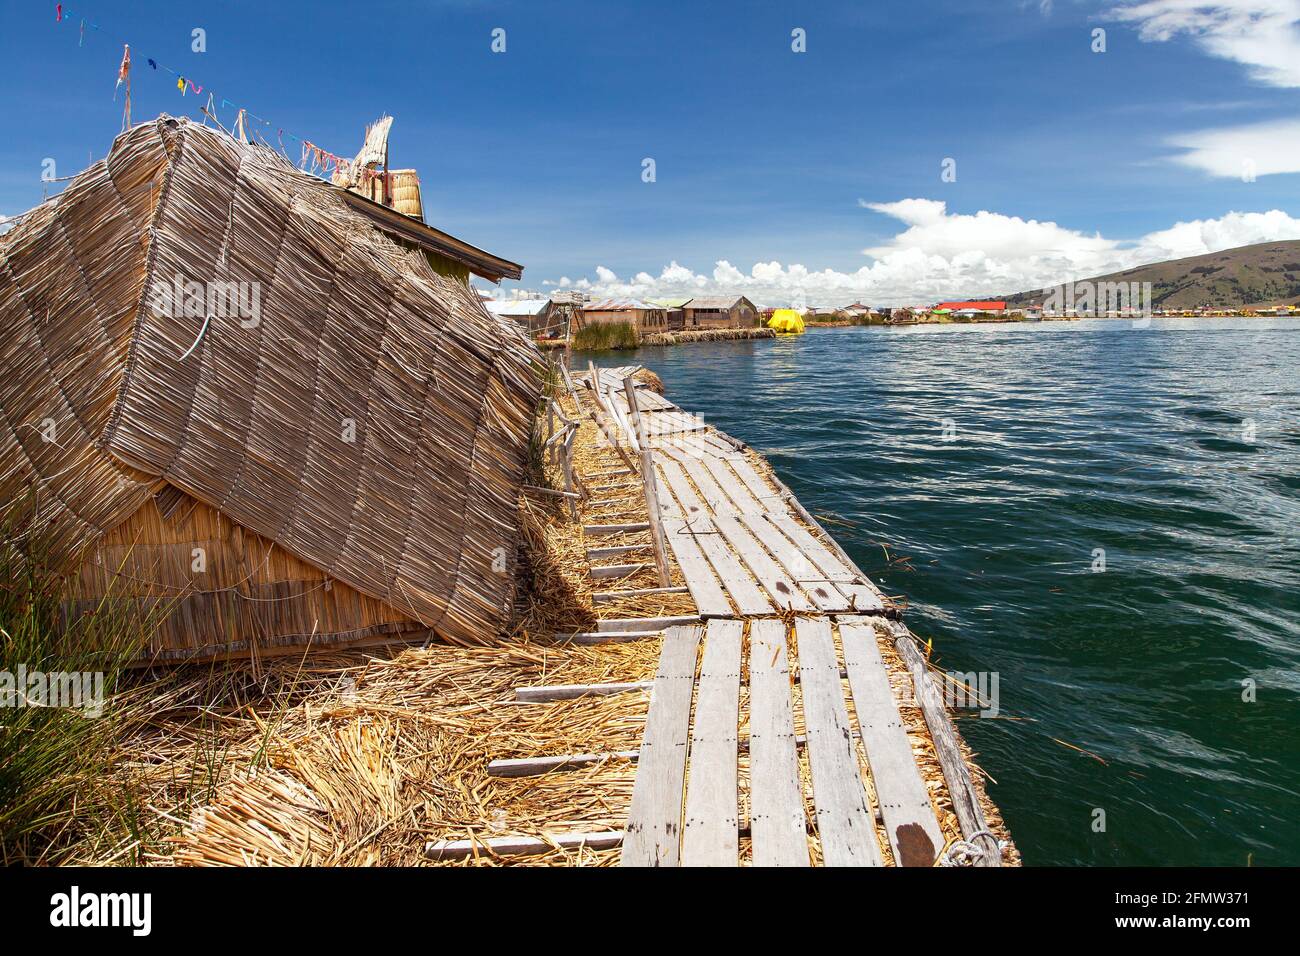 floating reed islands on lake Titicaca, Puno town, altiplano Peru Stock Photo